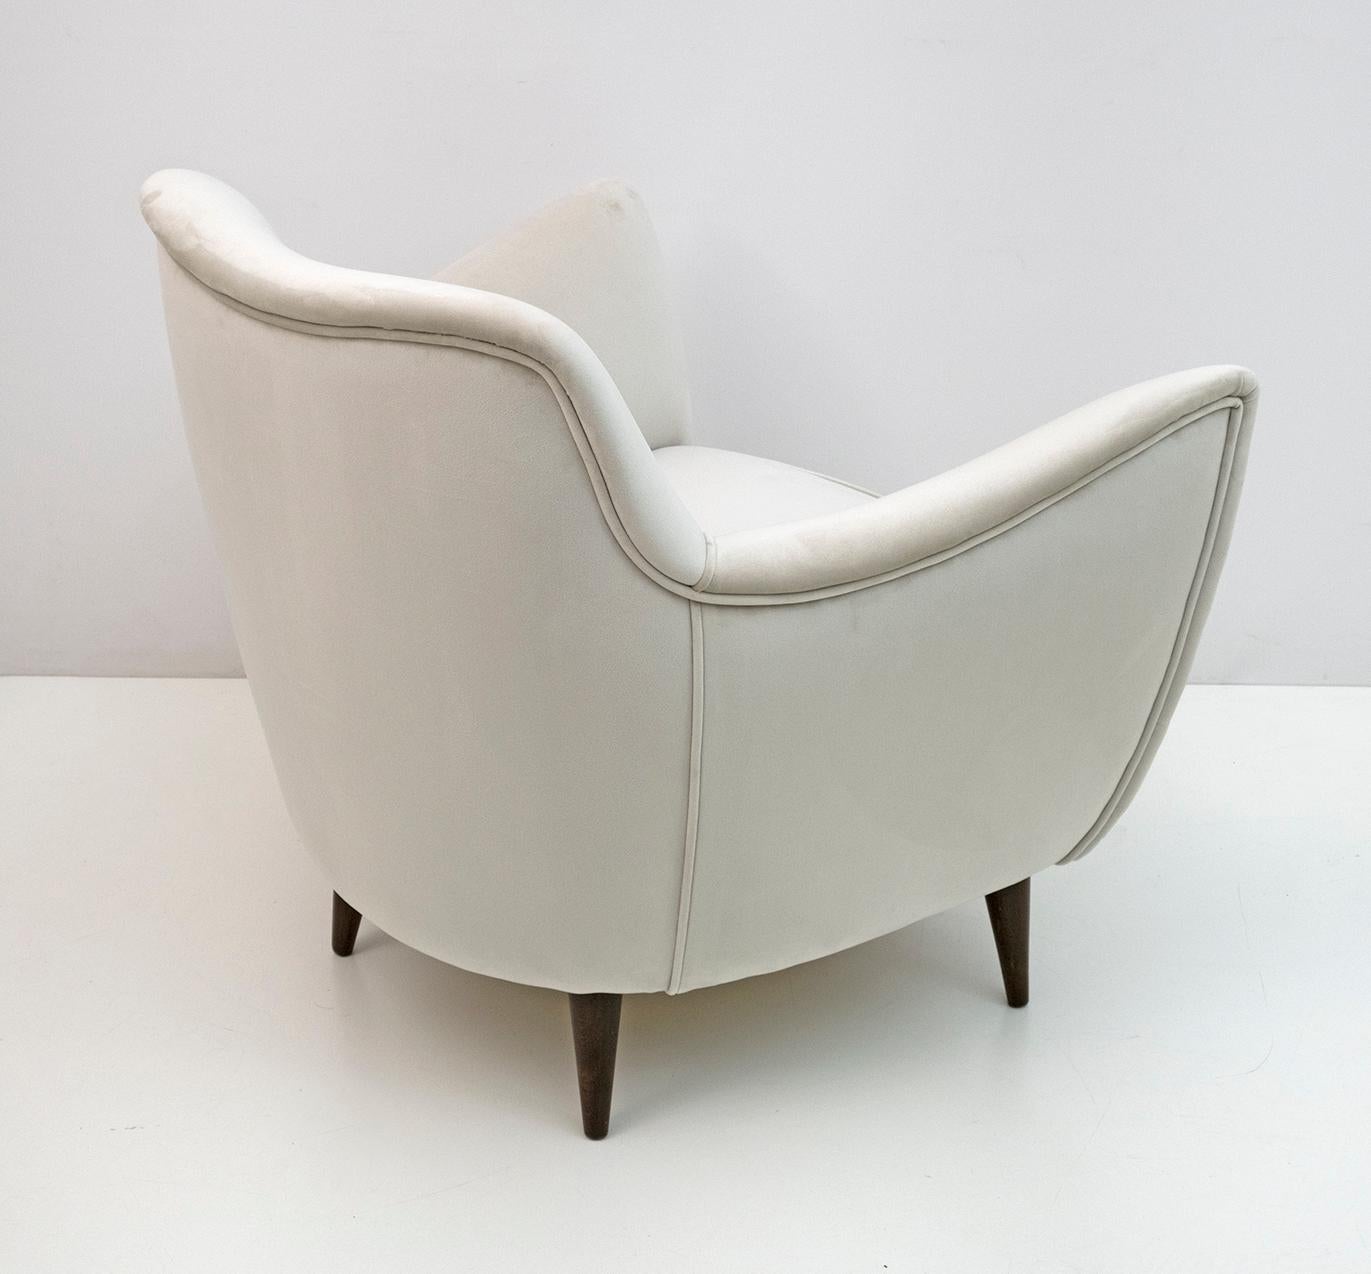 G. Veronesi Mid-Century Modern Italian Velvet Armchair by ISA, 1950s For Sale 2